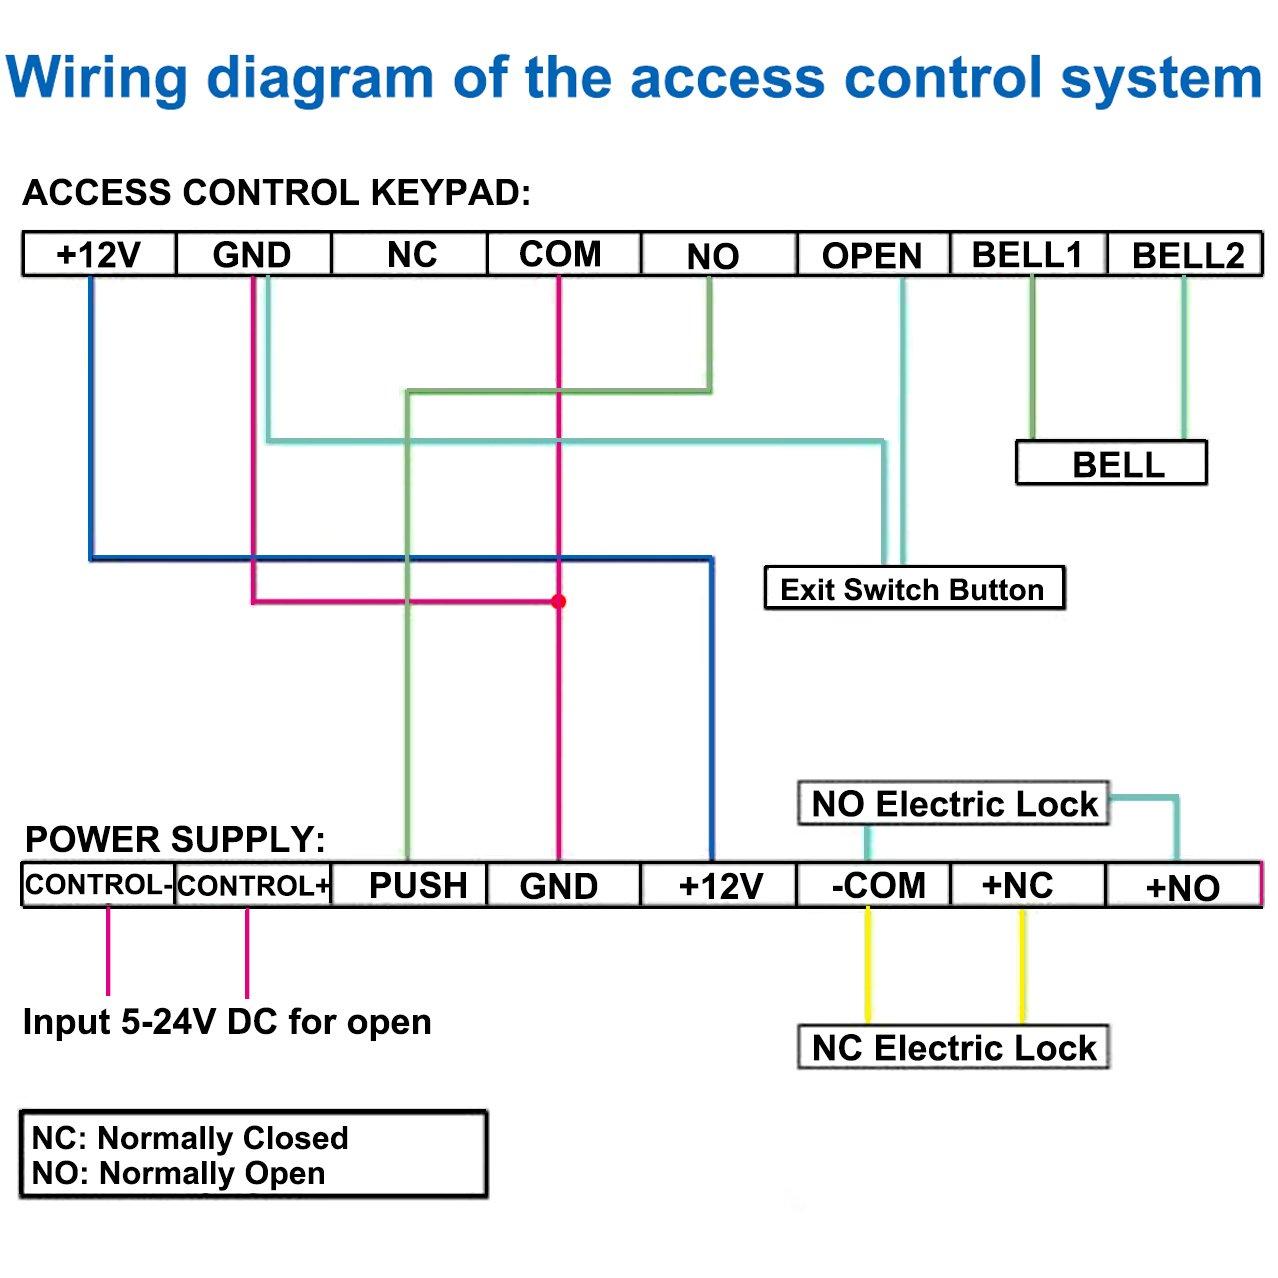 power supply control